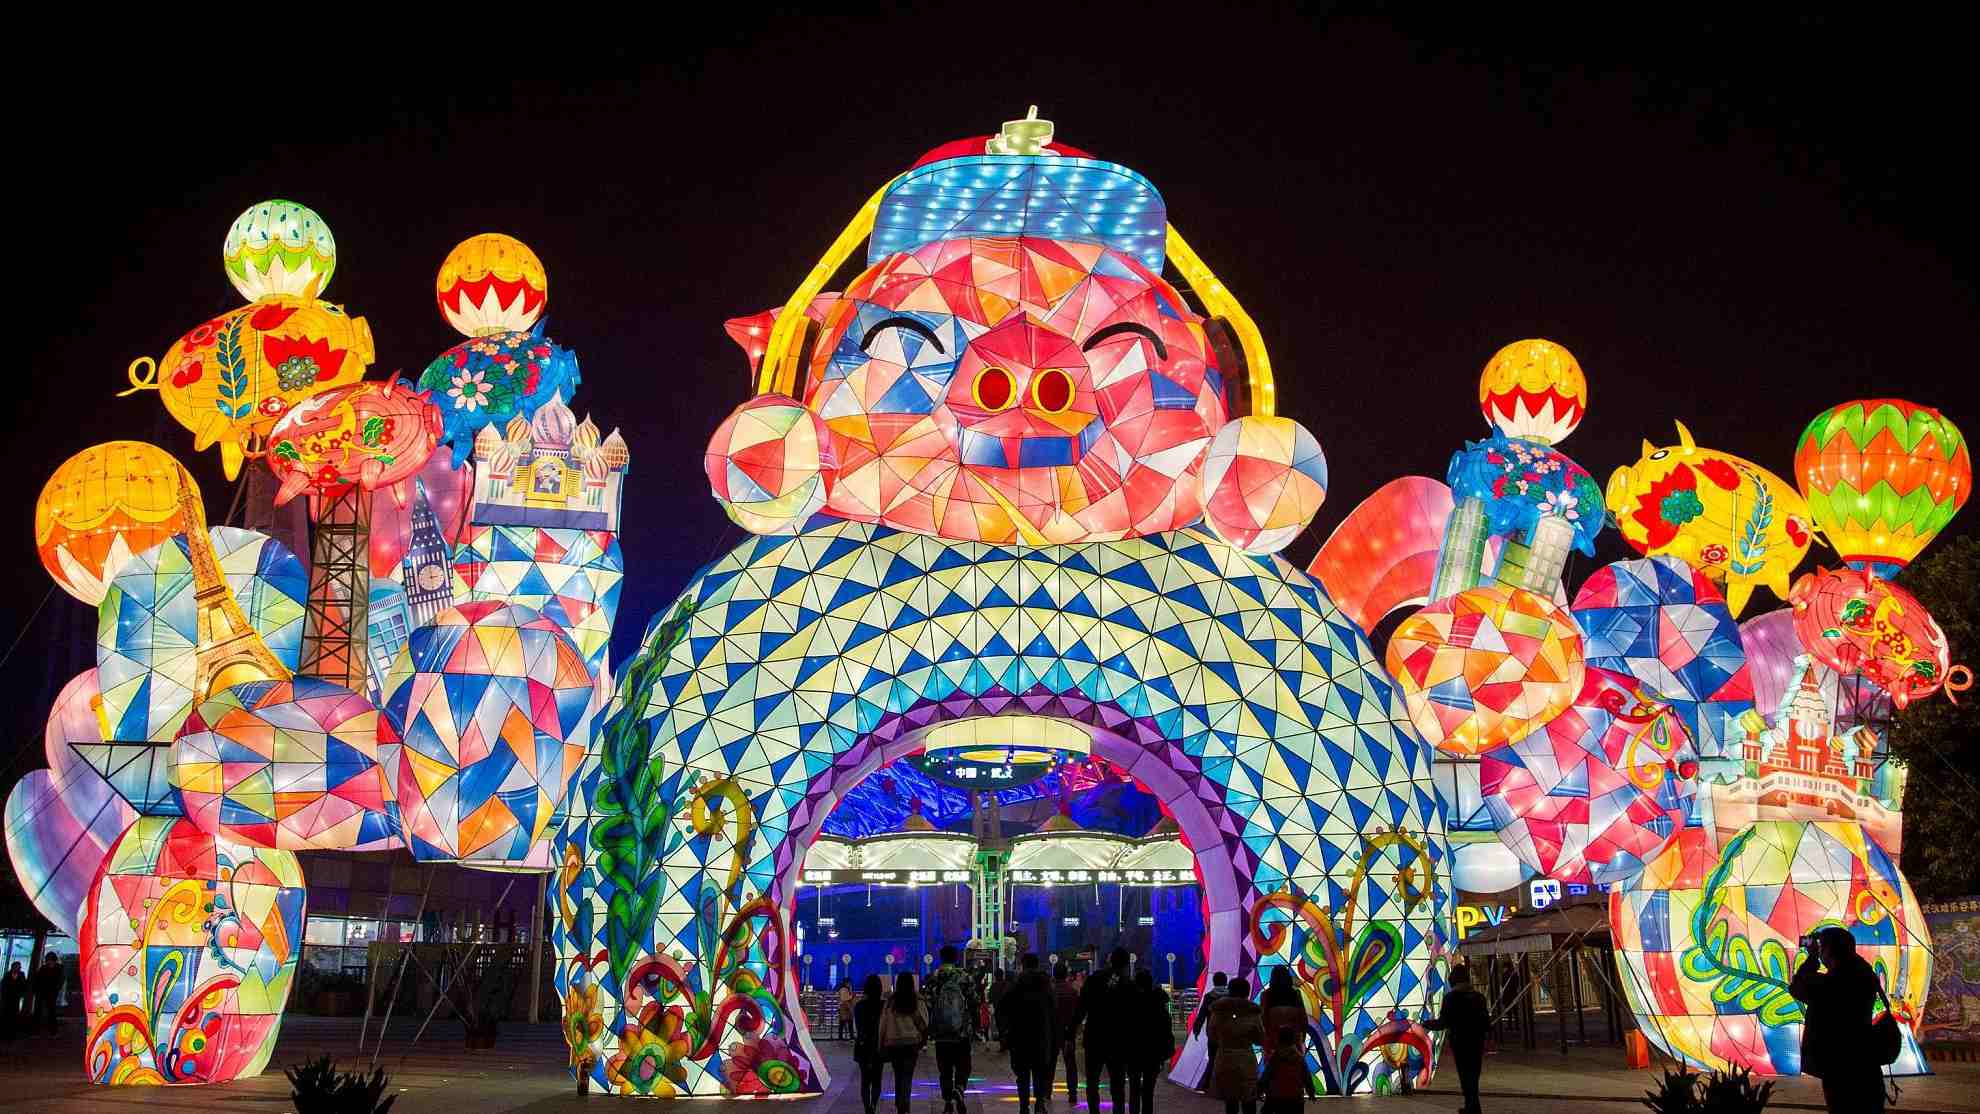 Lantern festivals held across China to greet the new year - CGTN